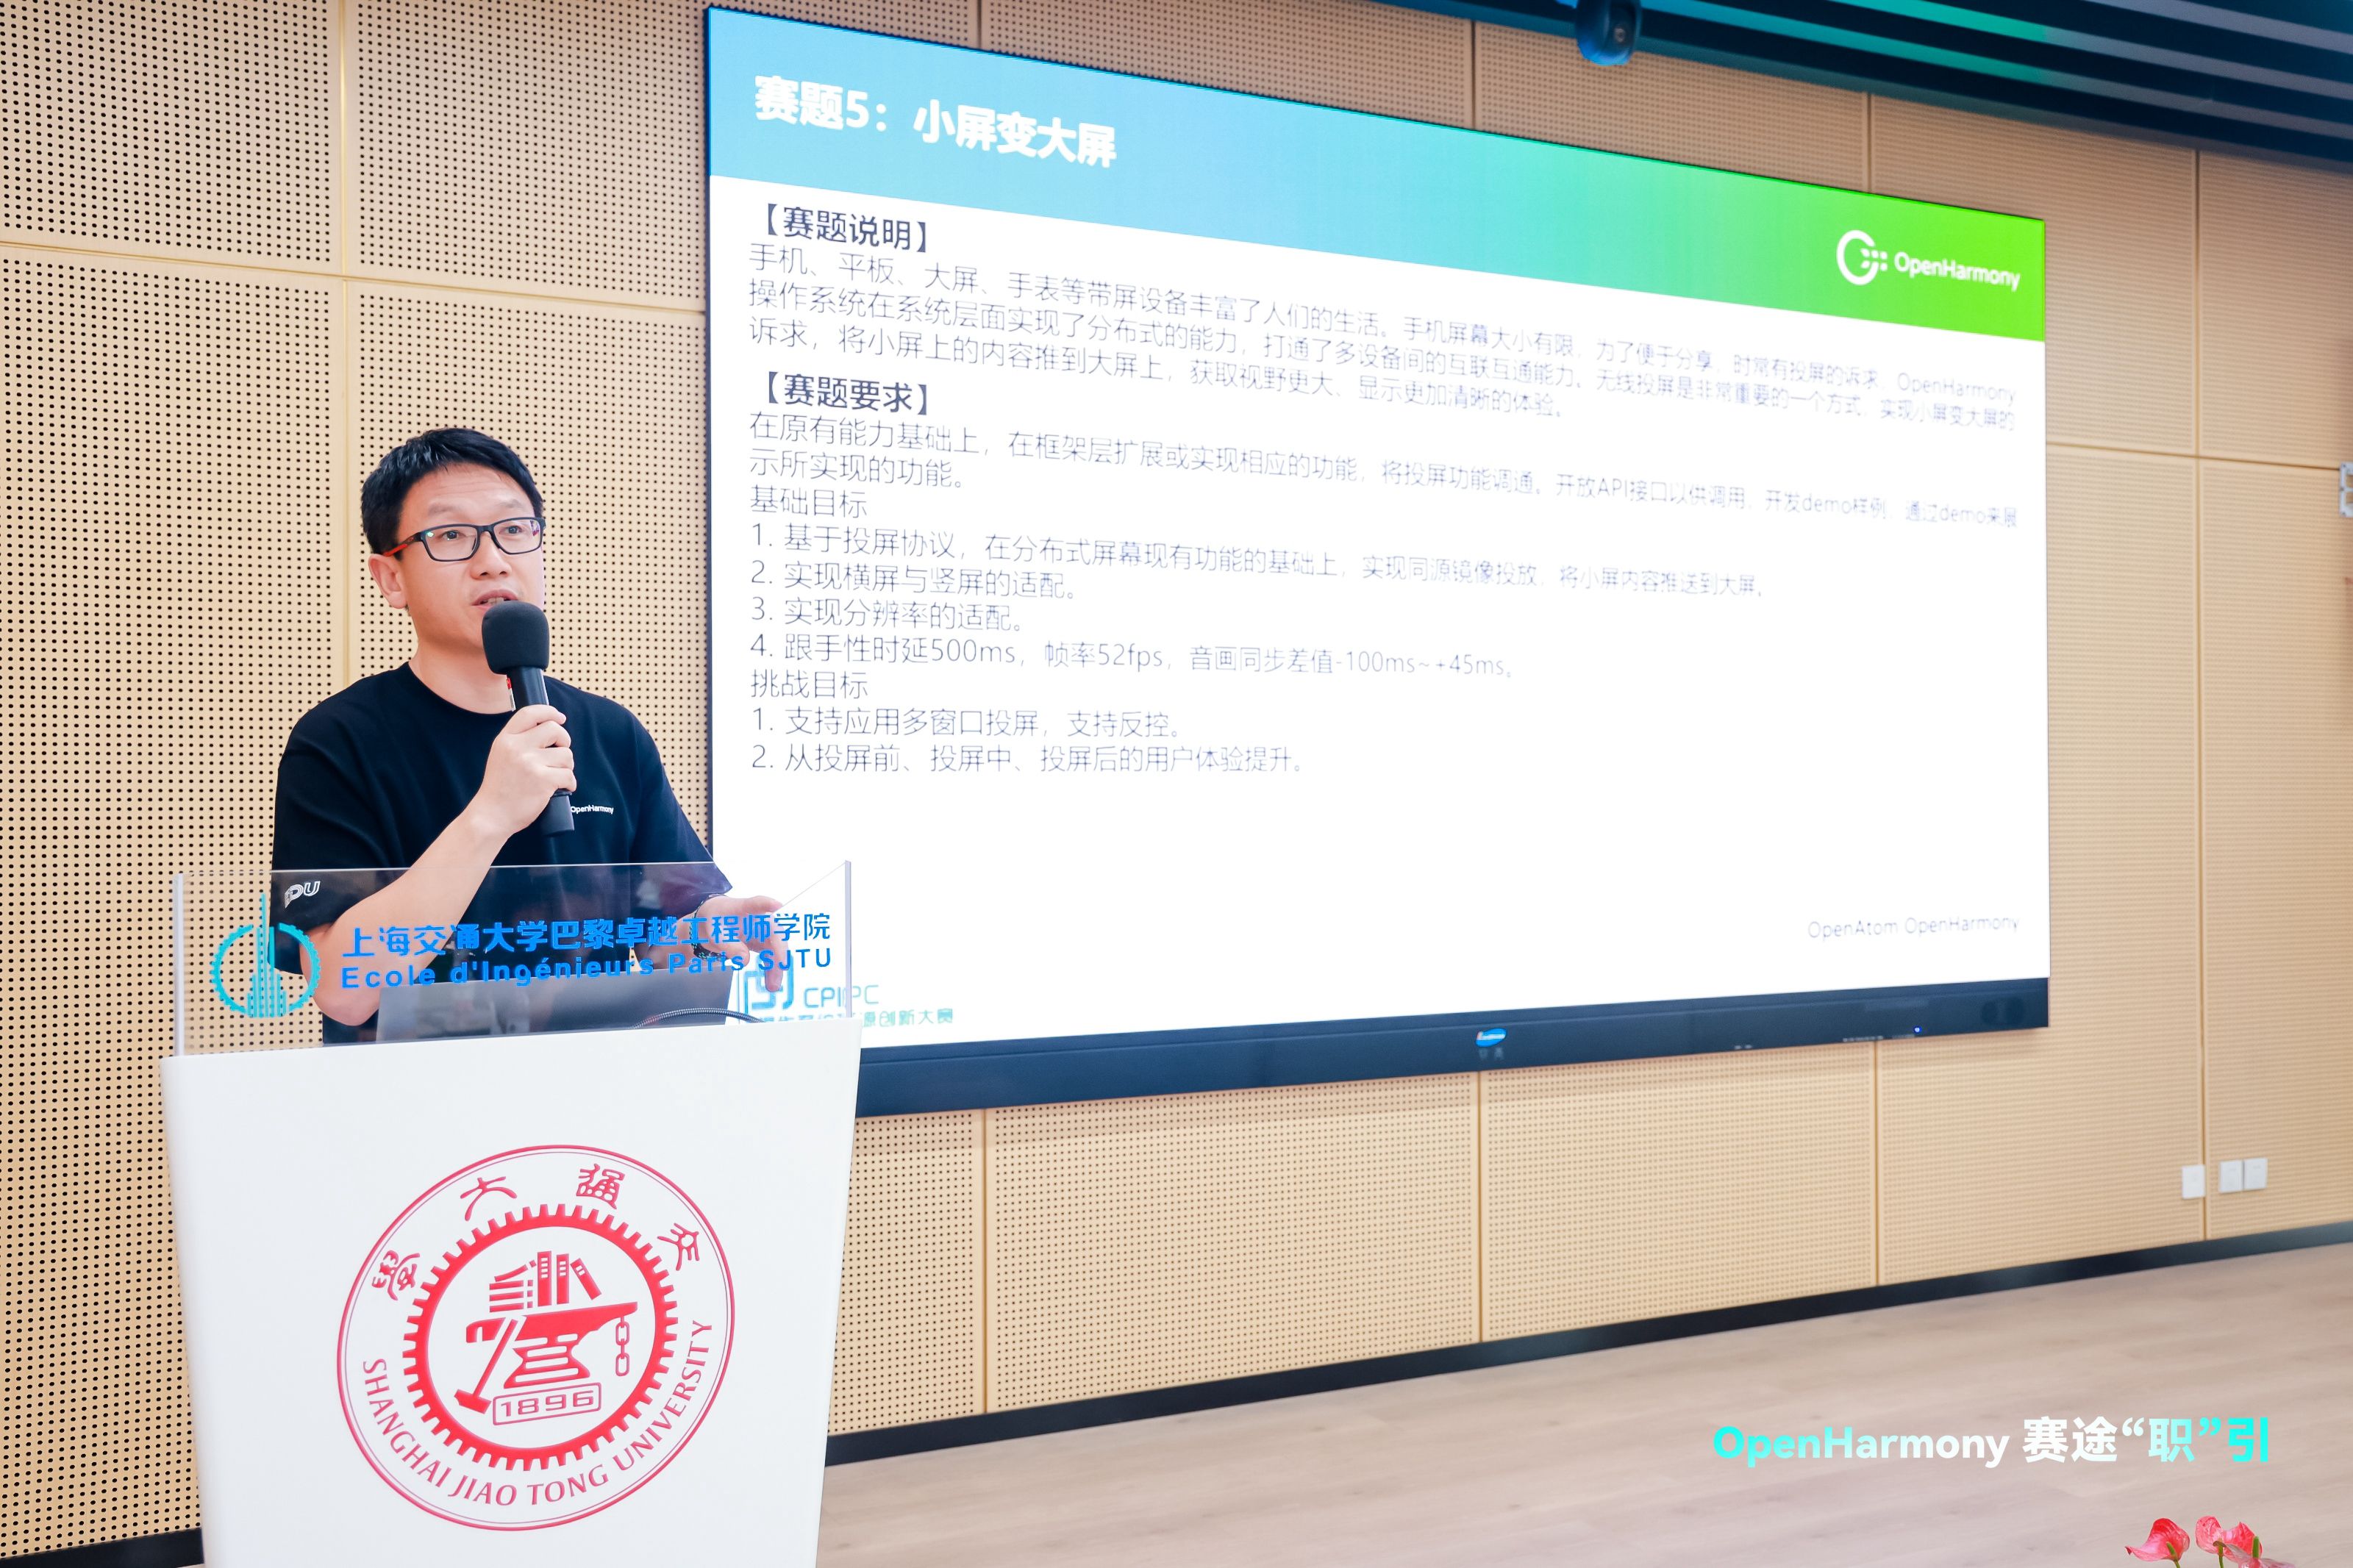 OpenHarmony赛途“职”引活动在上海交通大学举办